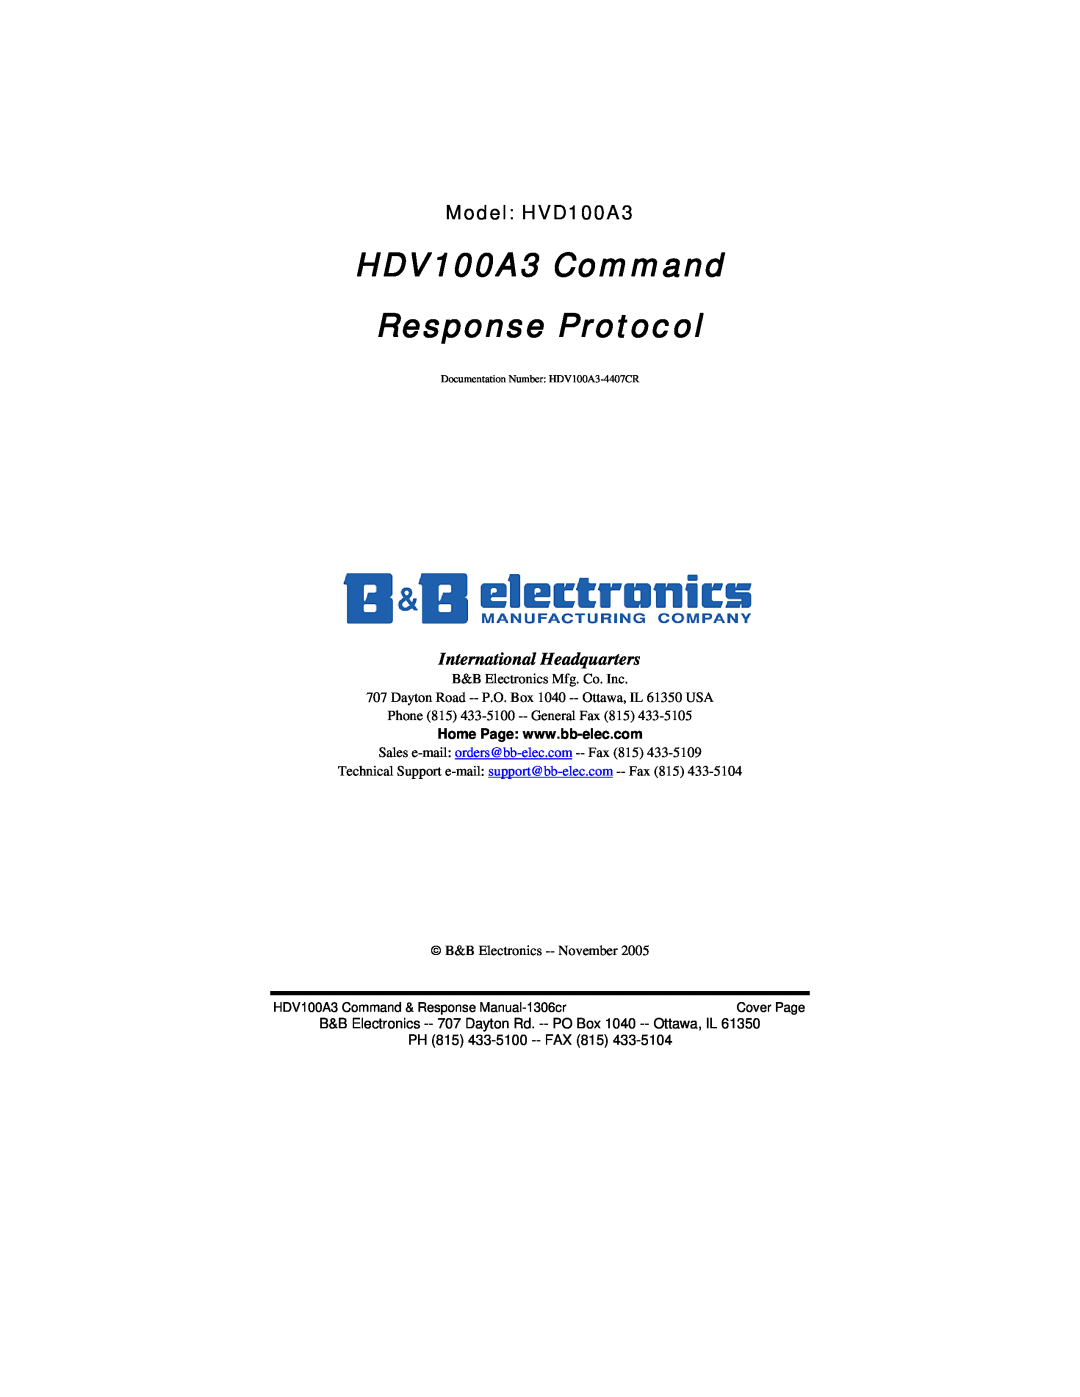 B&B Electronics manual HDV100A3 Command Response Protocol, Model HVD100A3, International Headquarters 